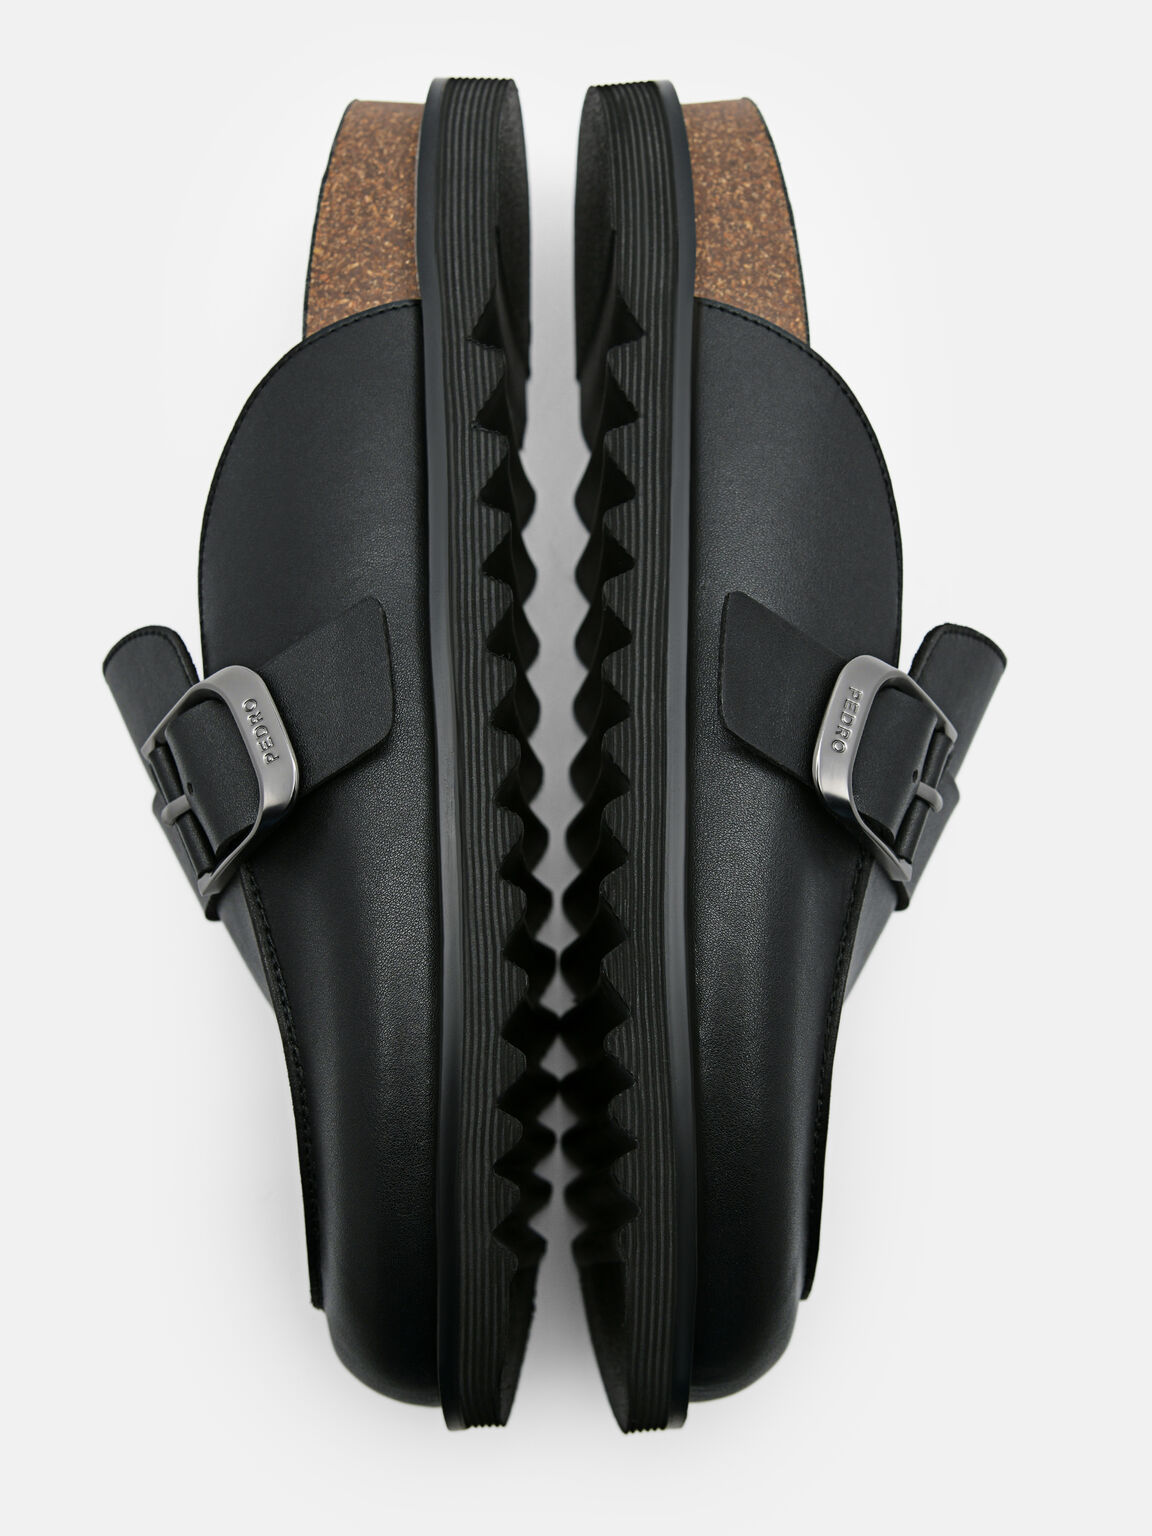 Helix Slip-On Sandals, Black